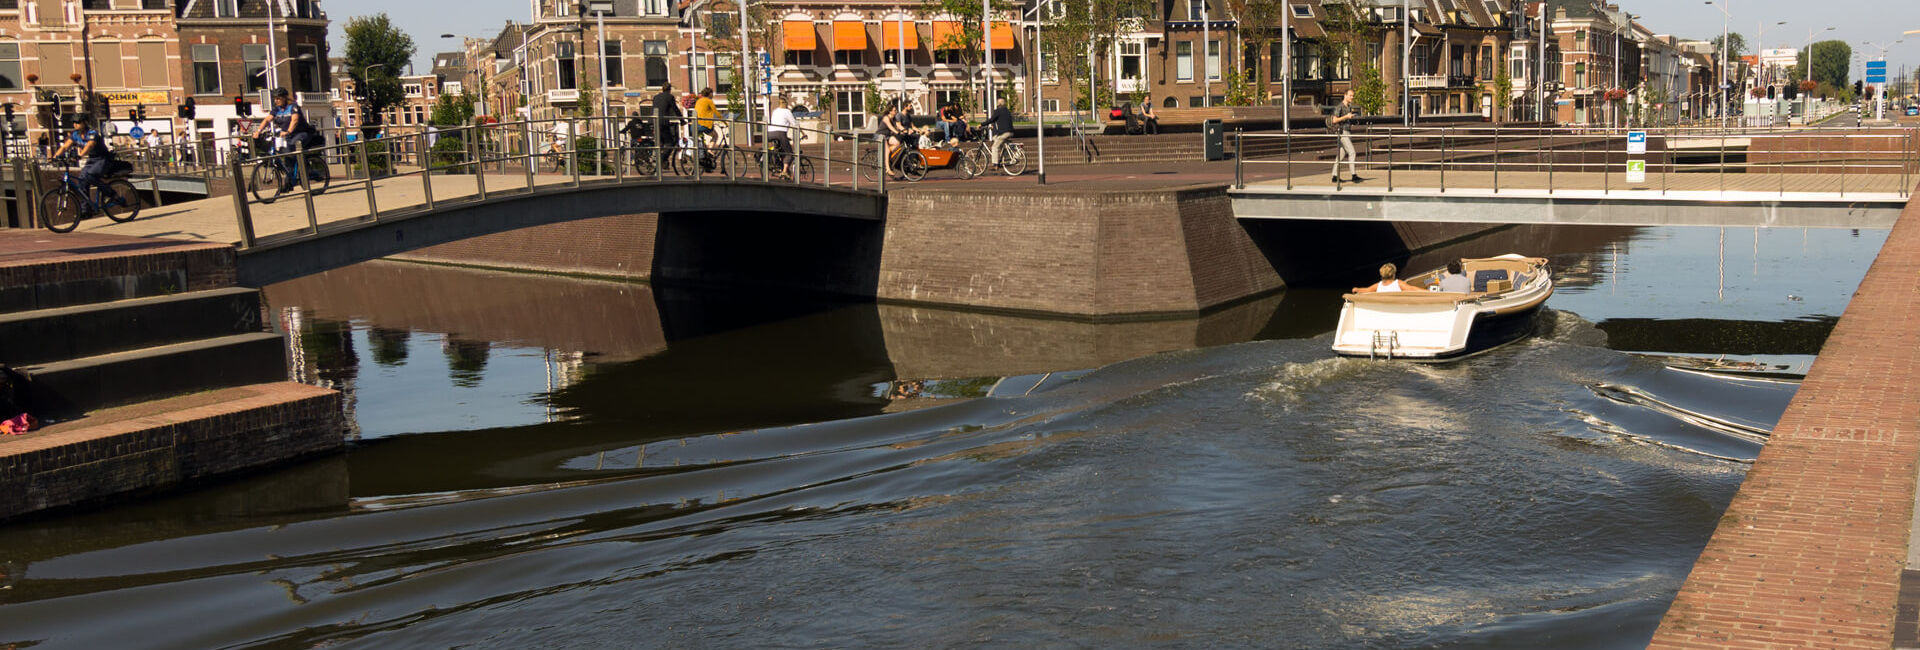 Vaartocht Delft onder bruggen - Nabij station Delft